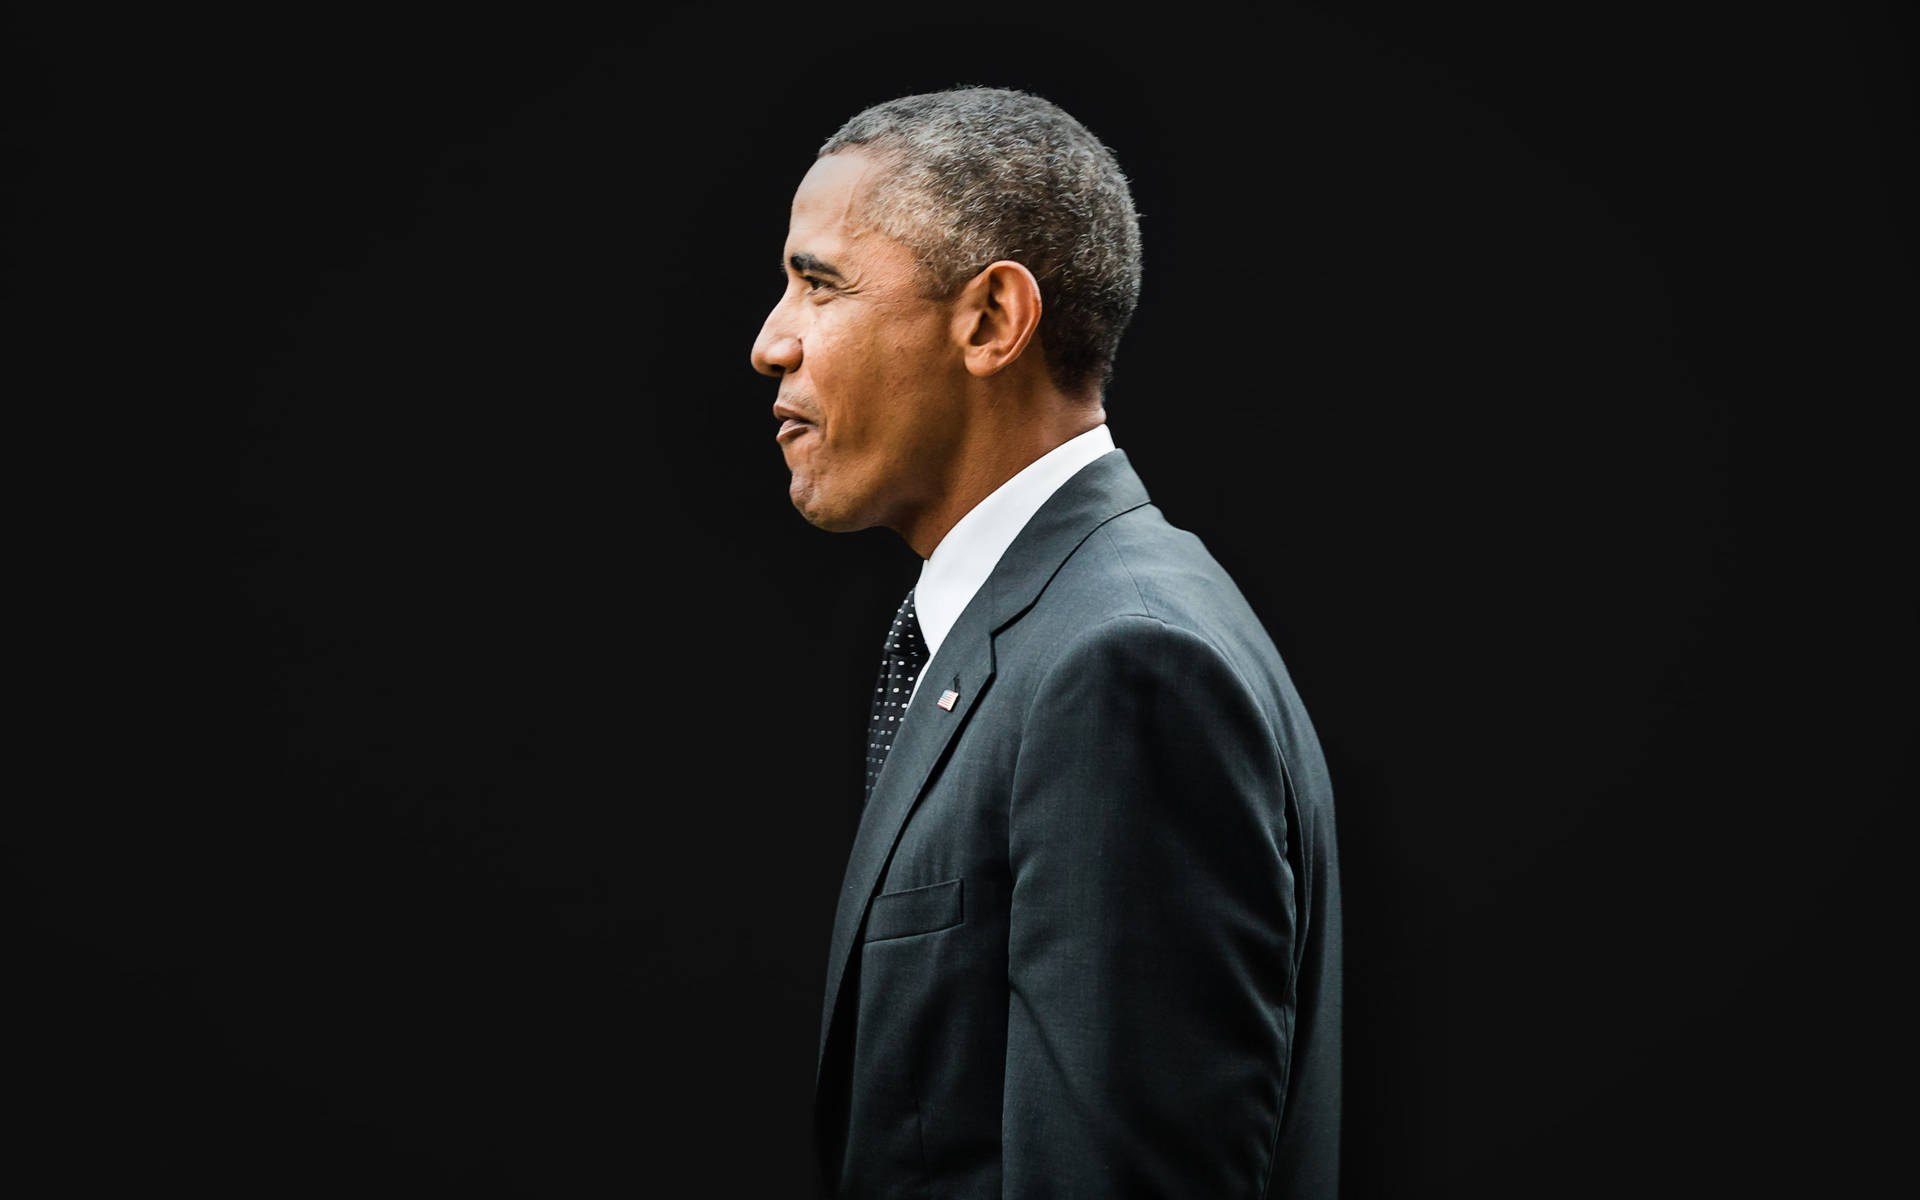 Barack Obama Side View Photograph